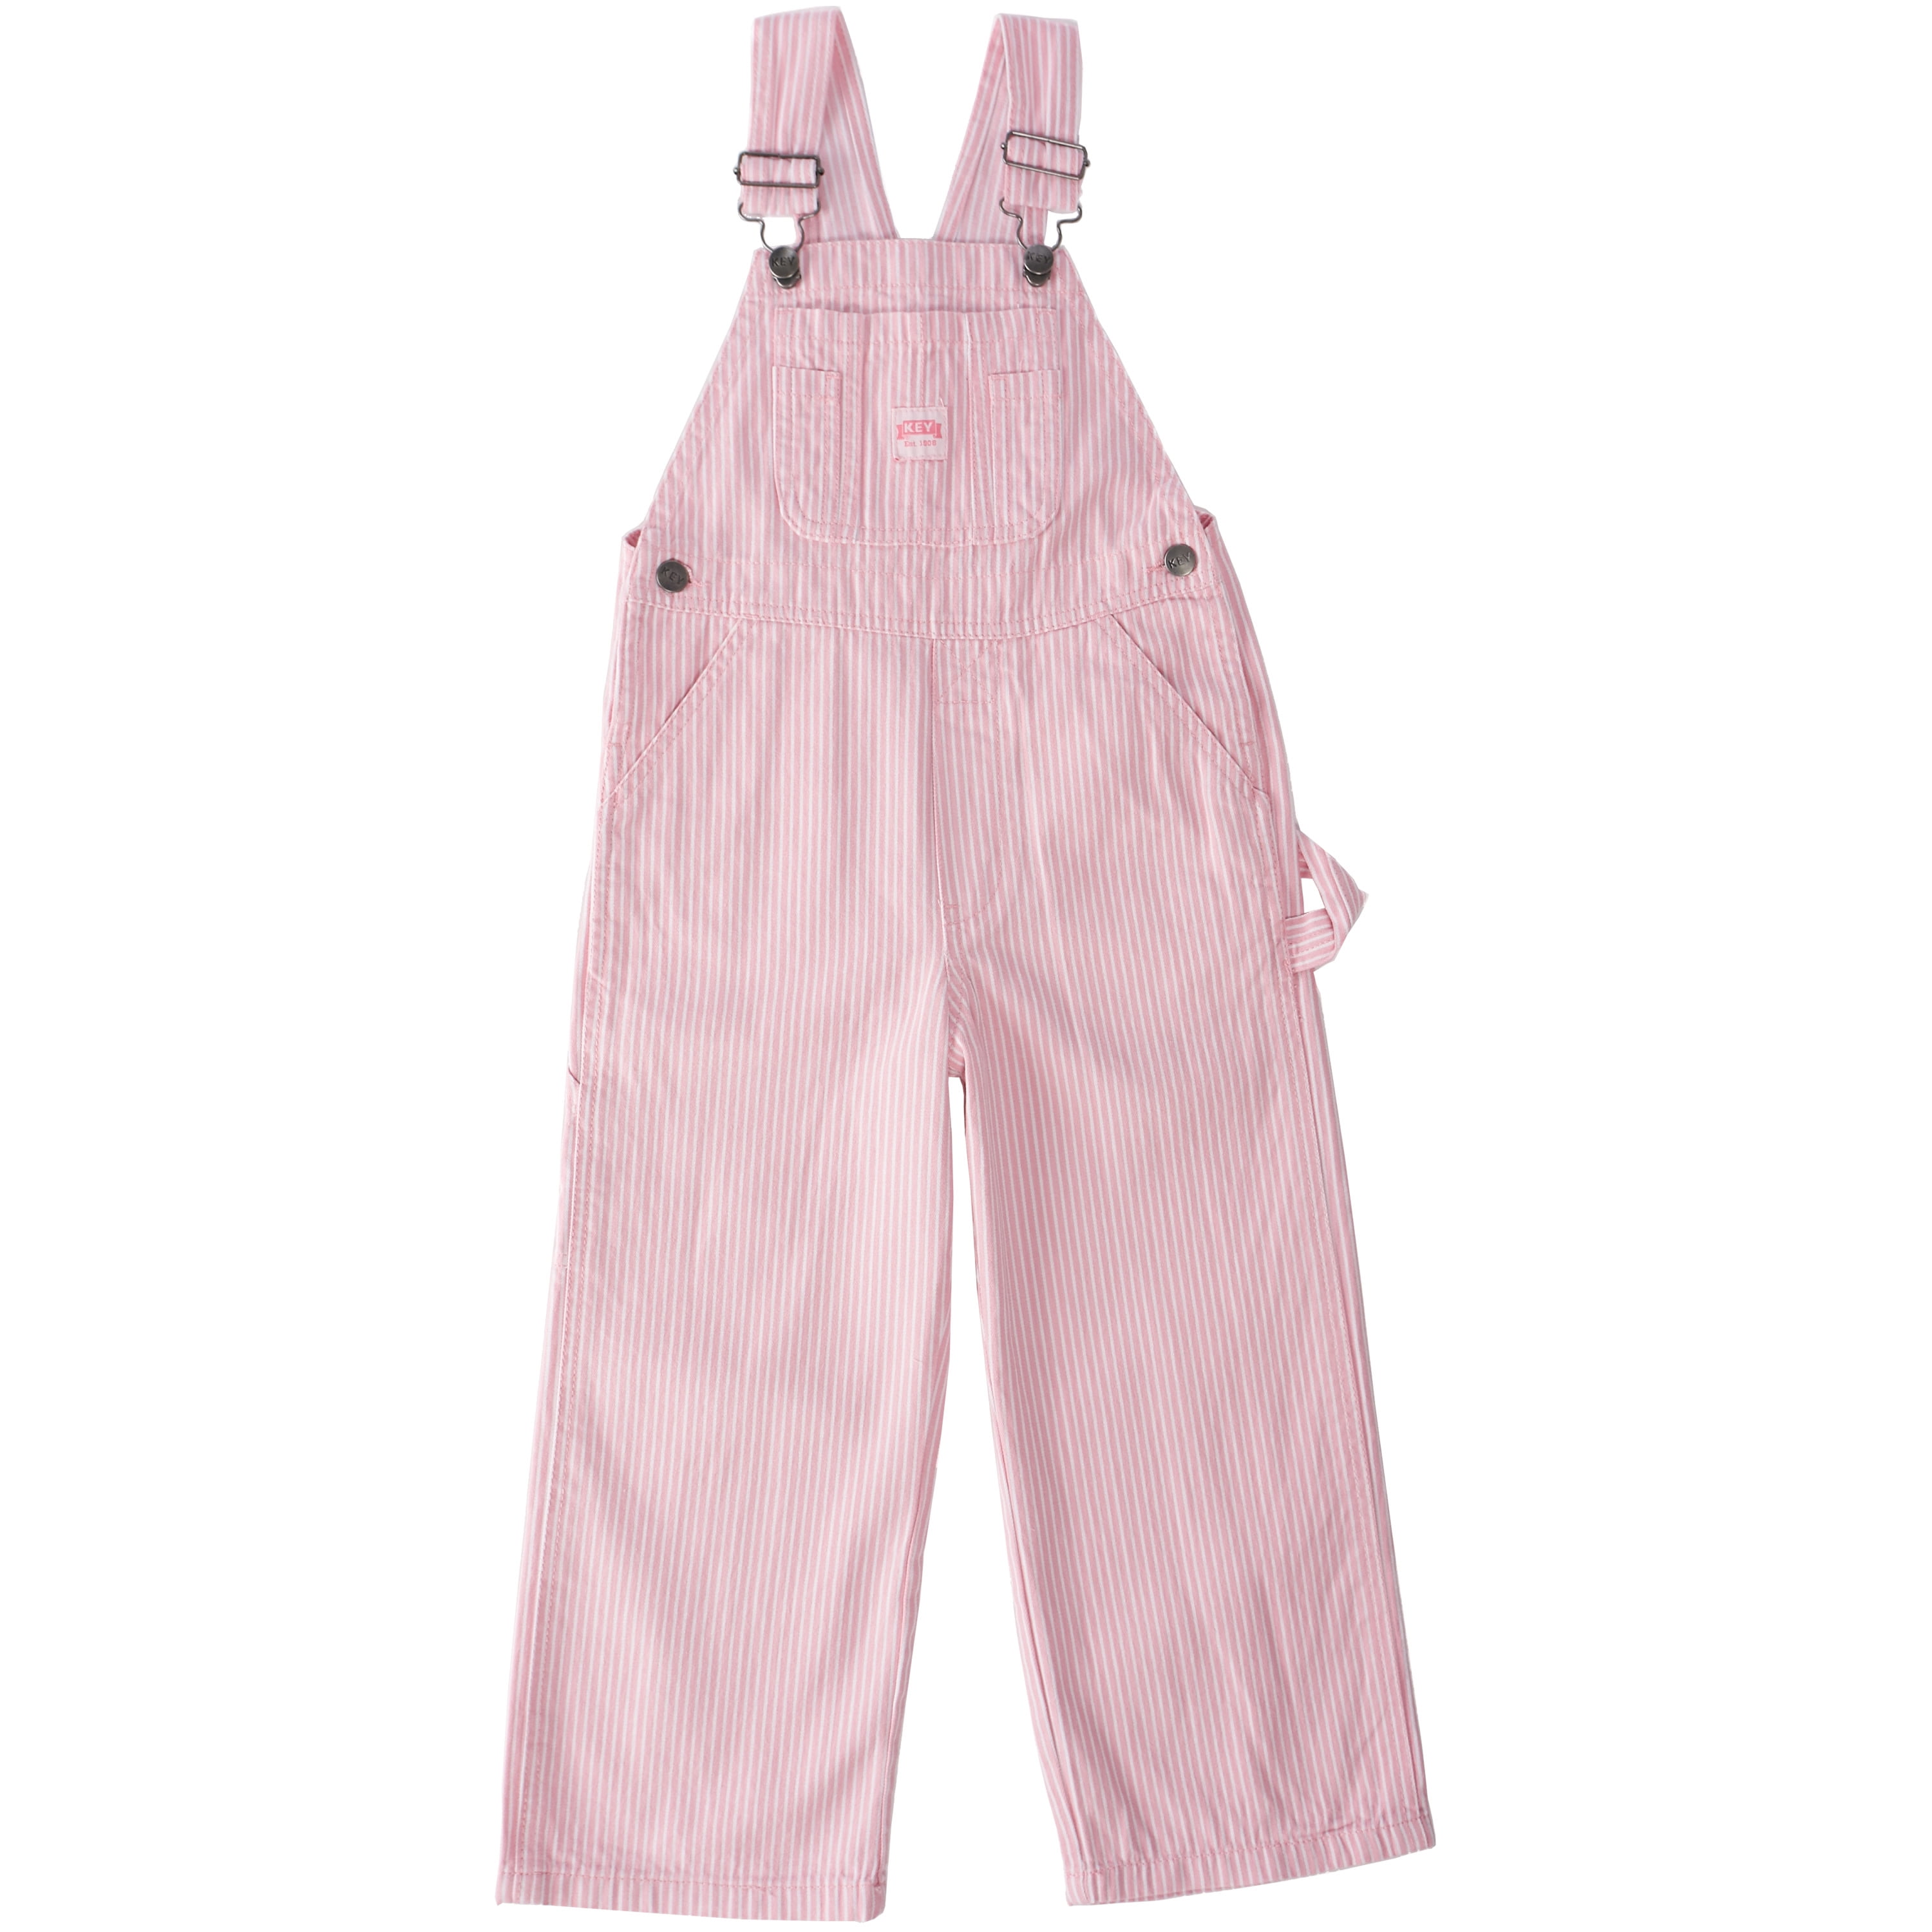 Kids Bib Overall - Pink Stripe - Walmart.com